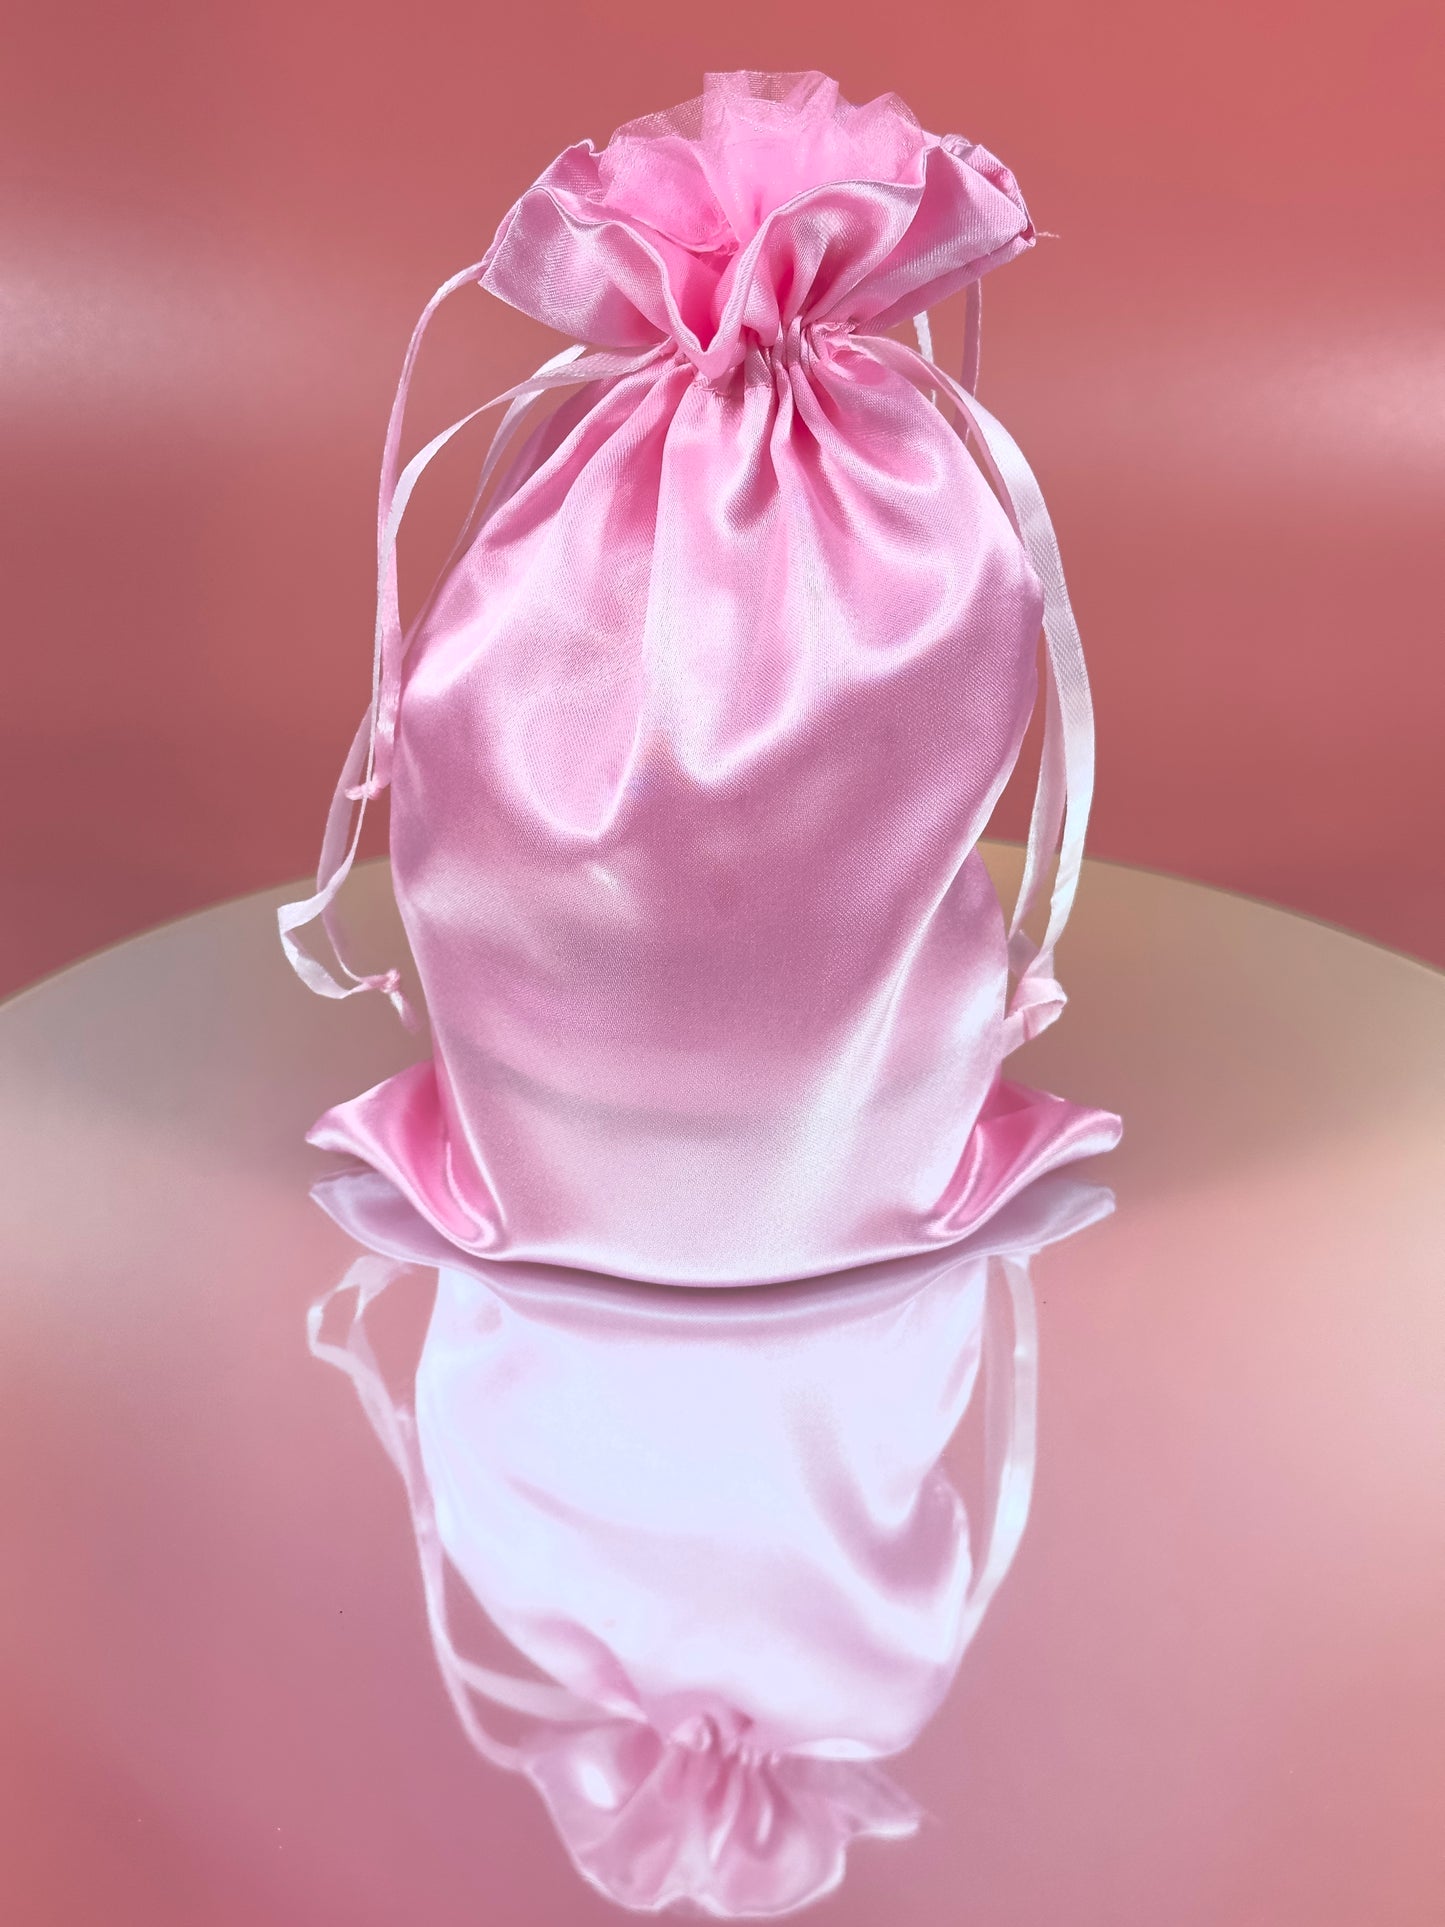 VILLA ROSA | Vintage Style Perfumed Body Powder + Pink Puff Applicator - 8 oz